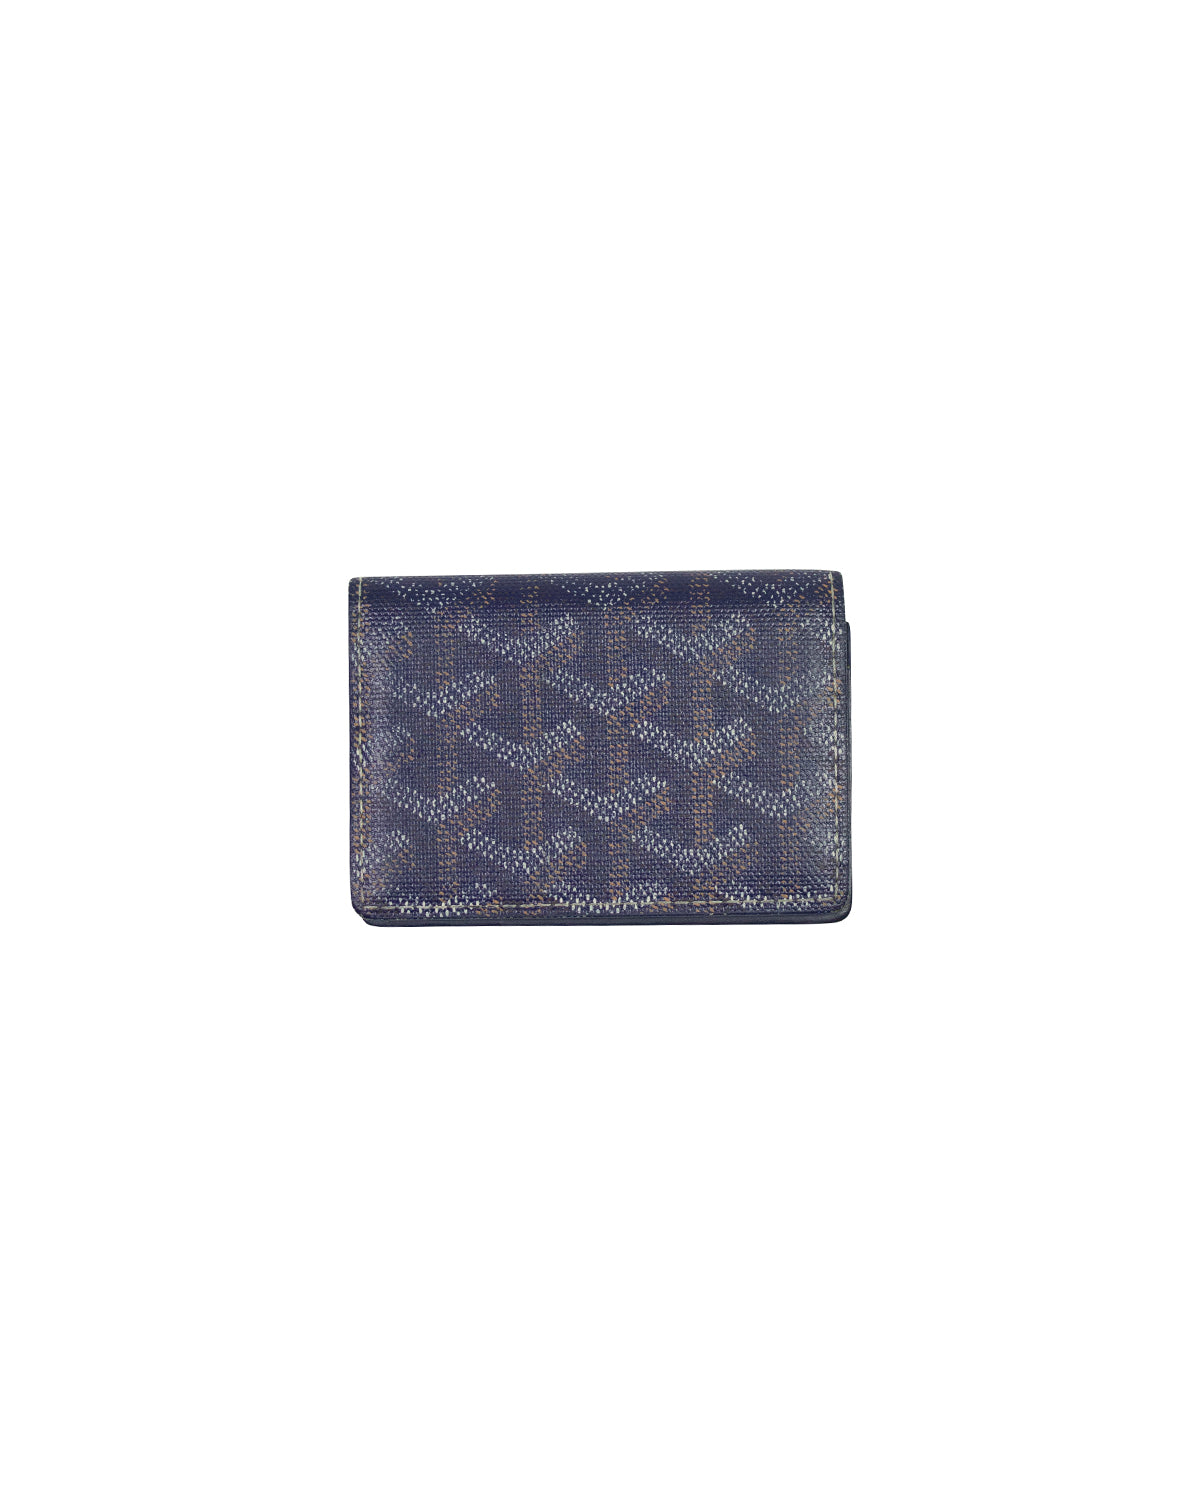 goyard card holder wallet